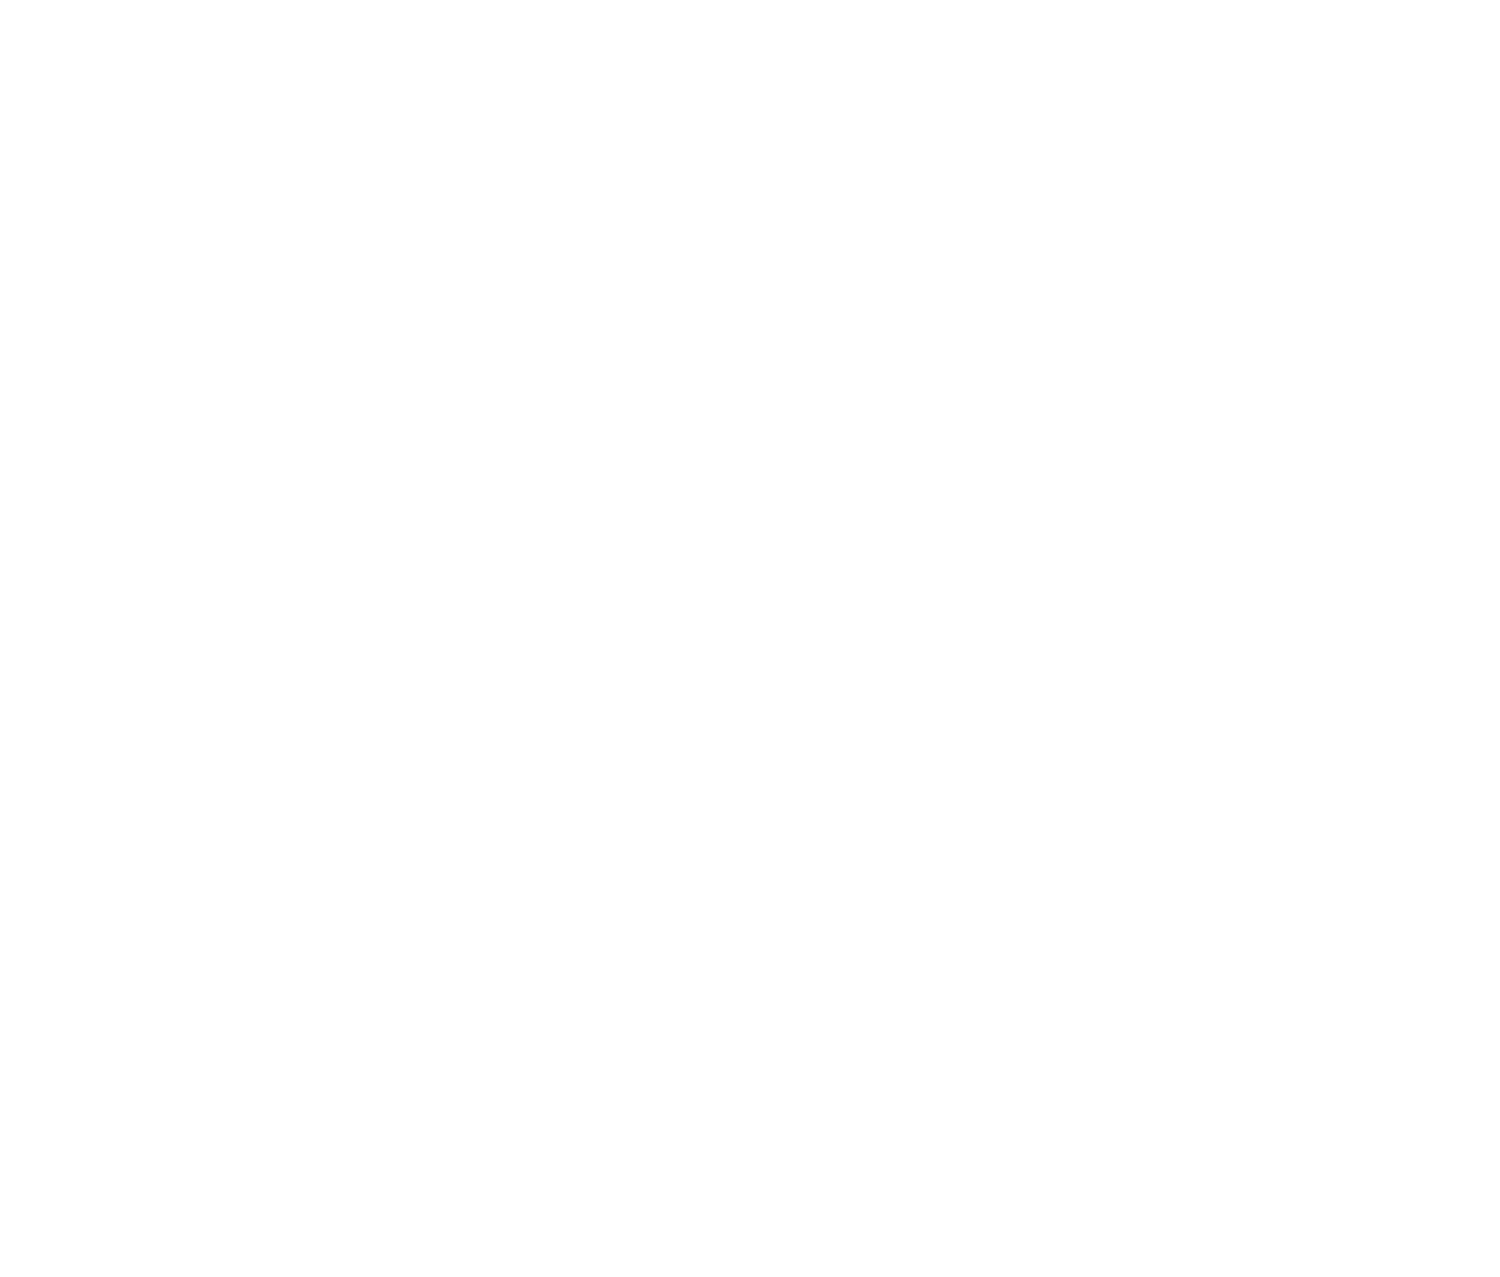   Community Innovation Lab